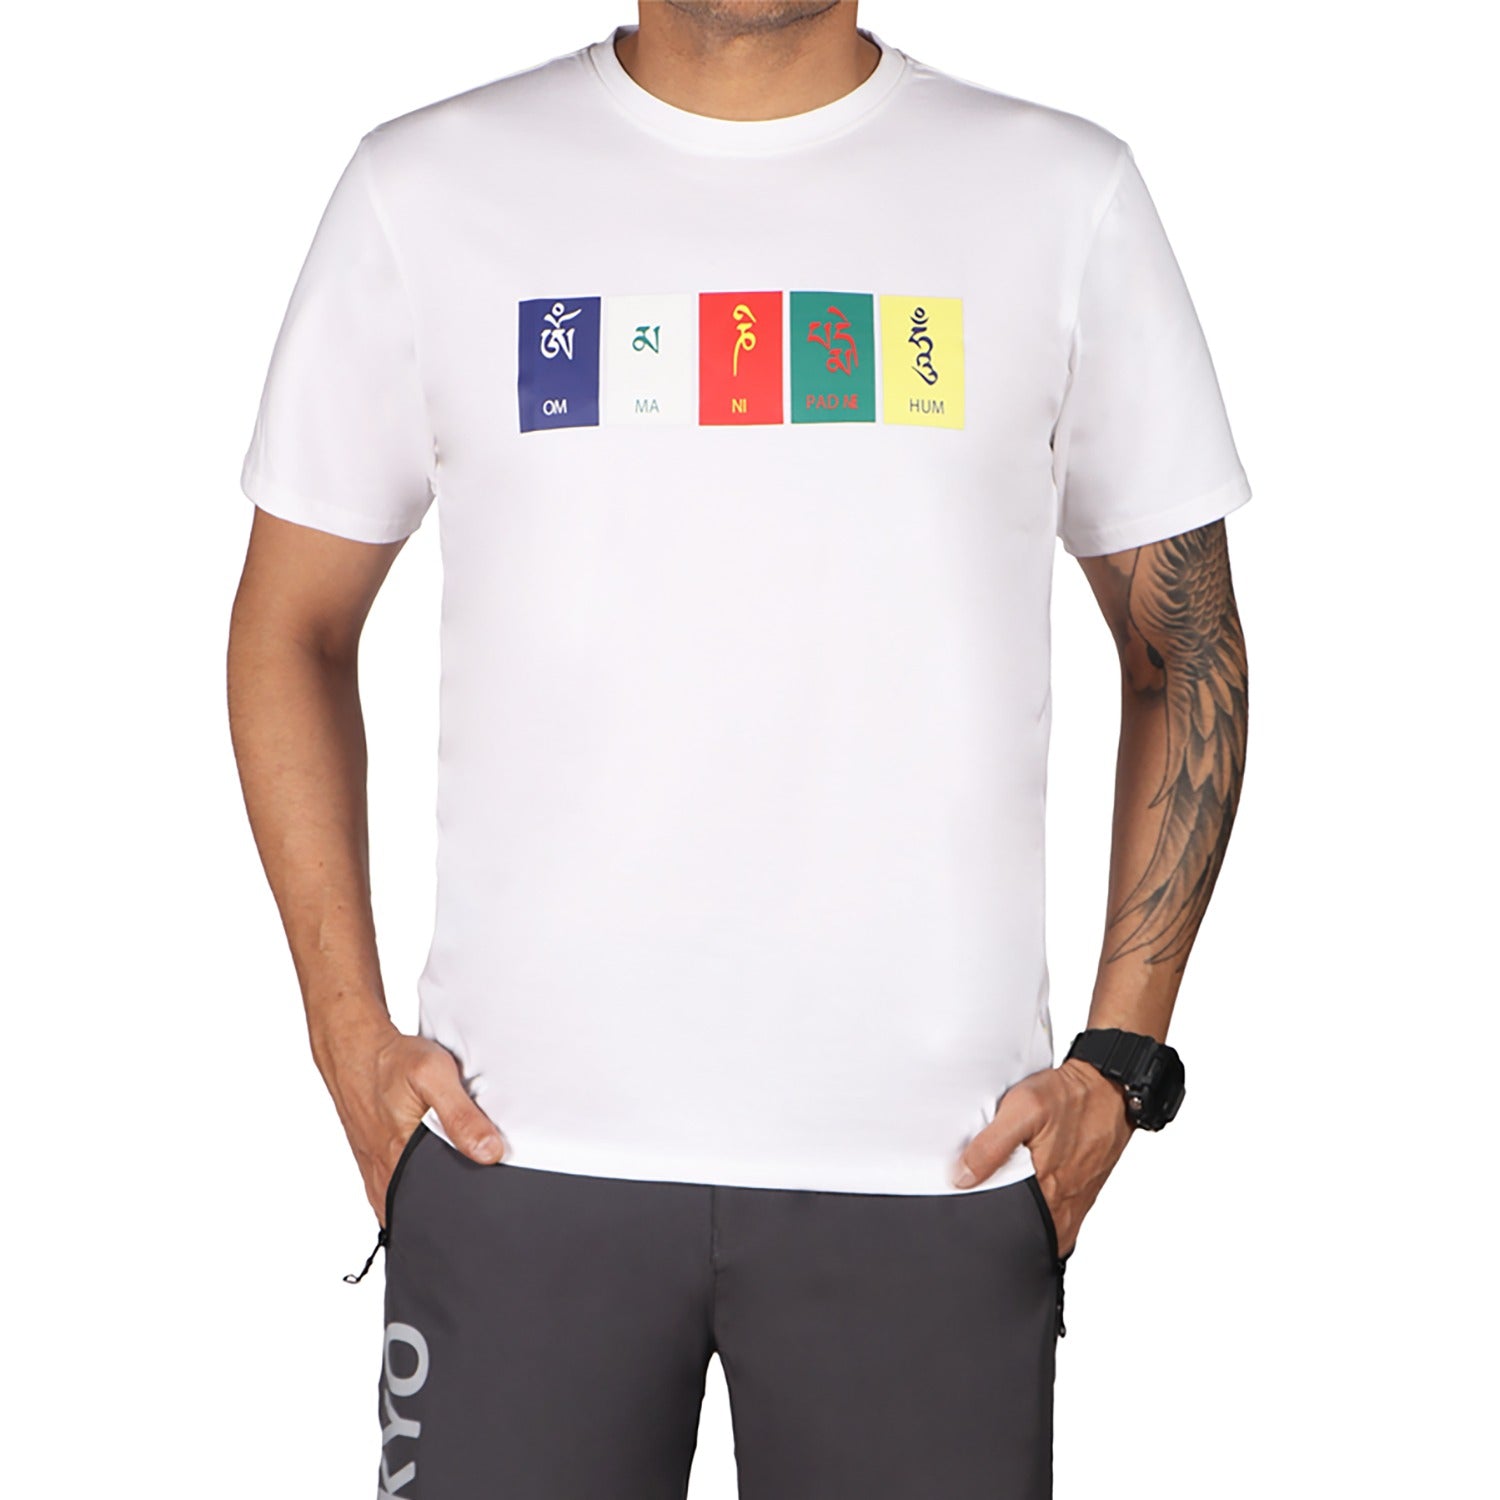 Buy Gokyo GOKYO Originals Tshirt - Om Mani Padme Hum | Trekking & Hiking T-shirts at Gokyo Outdoor Clothing & Gear